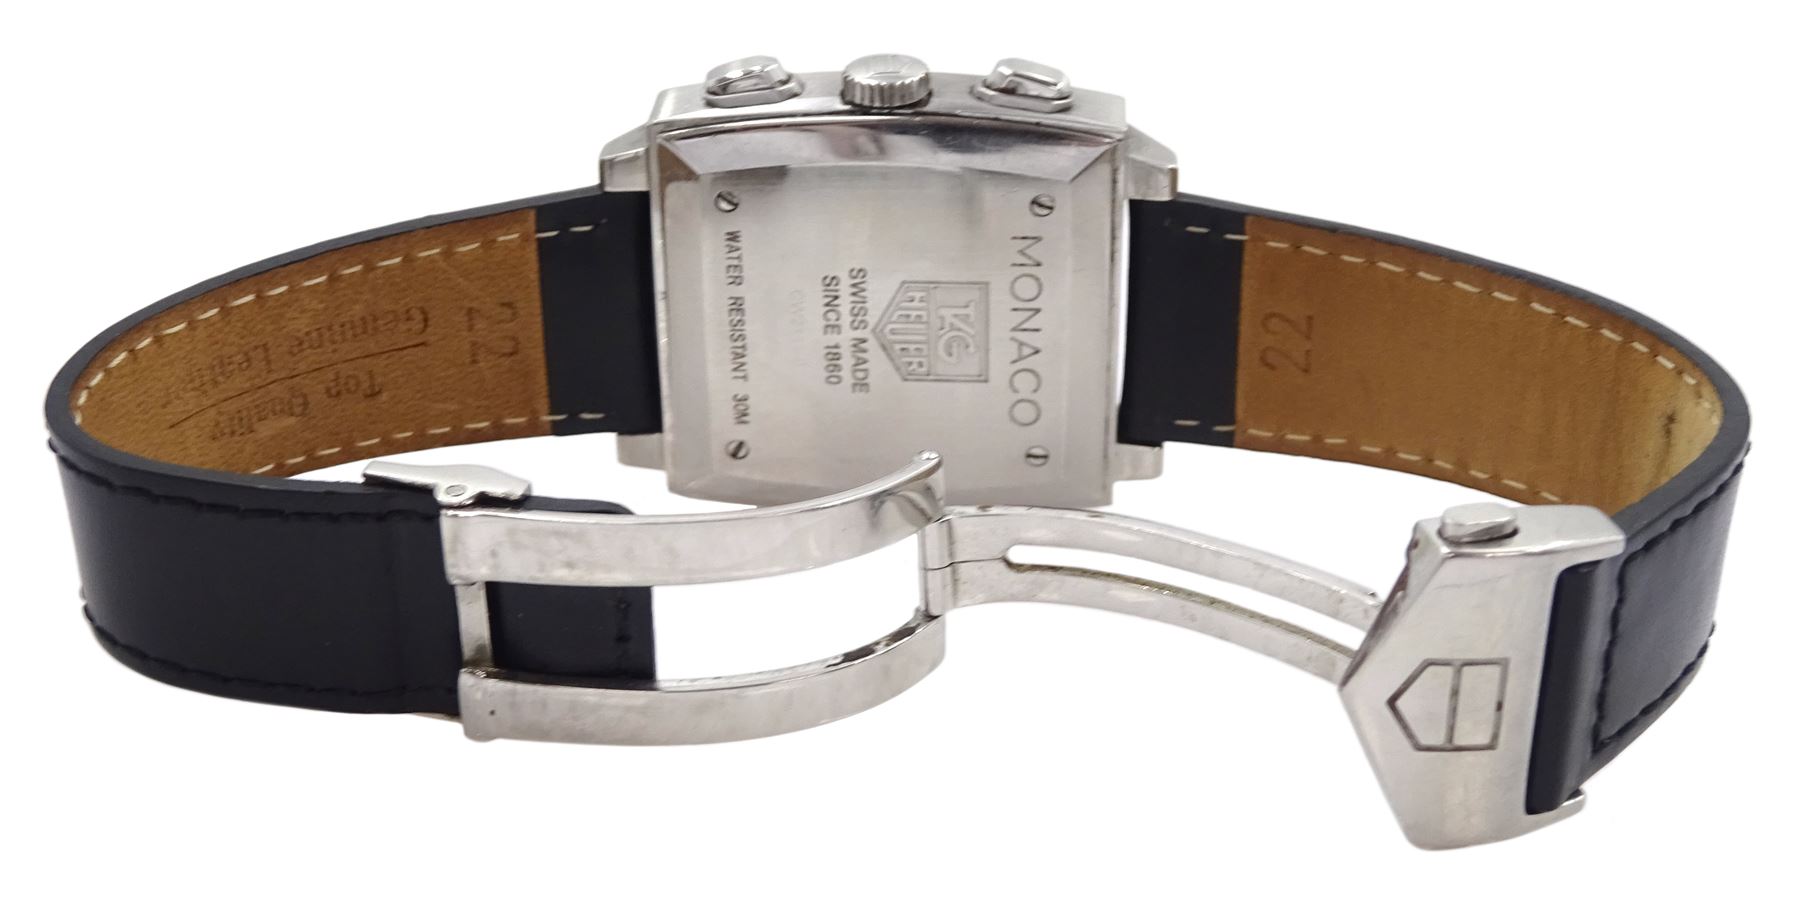 Tag Heuer Monaco gentleman's automatic chronograph wristwatch - Image 3 of 4